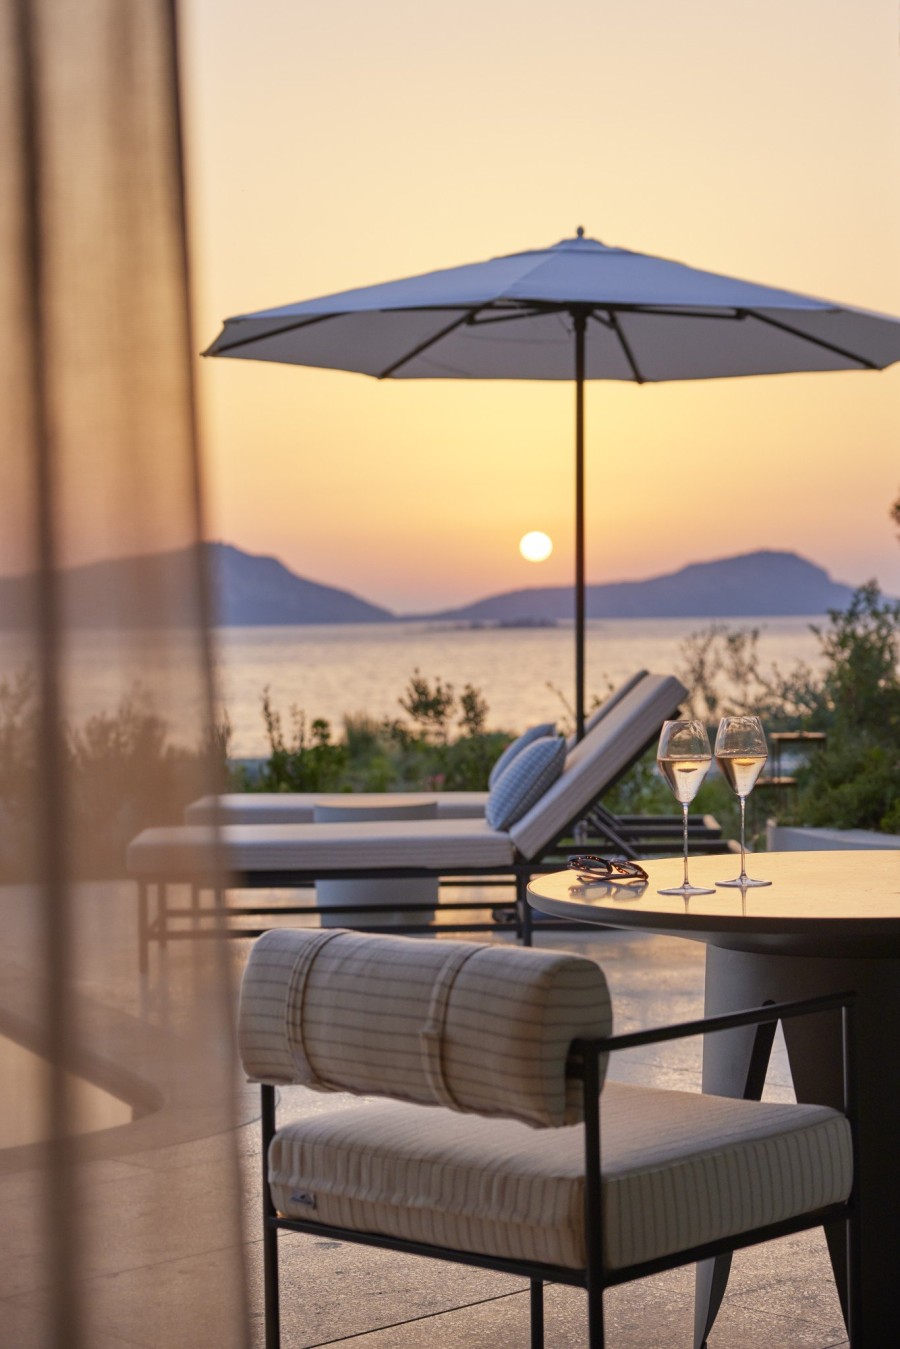 Opening now: Το πρώτο ξενοδοχείο της Mandarin Oriental στην Ελλάδα έκανε μόλις το ντεμπούτο του στην Costa Navarino- Φωτογραφία 2